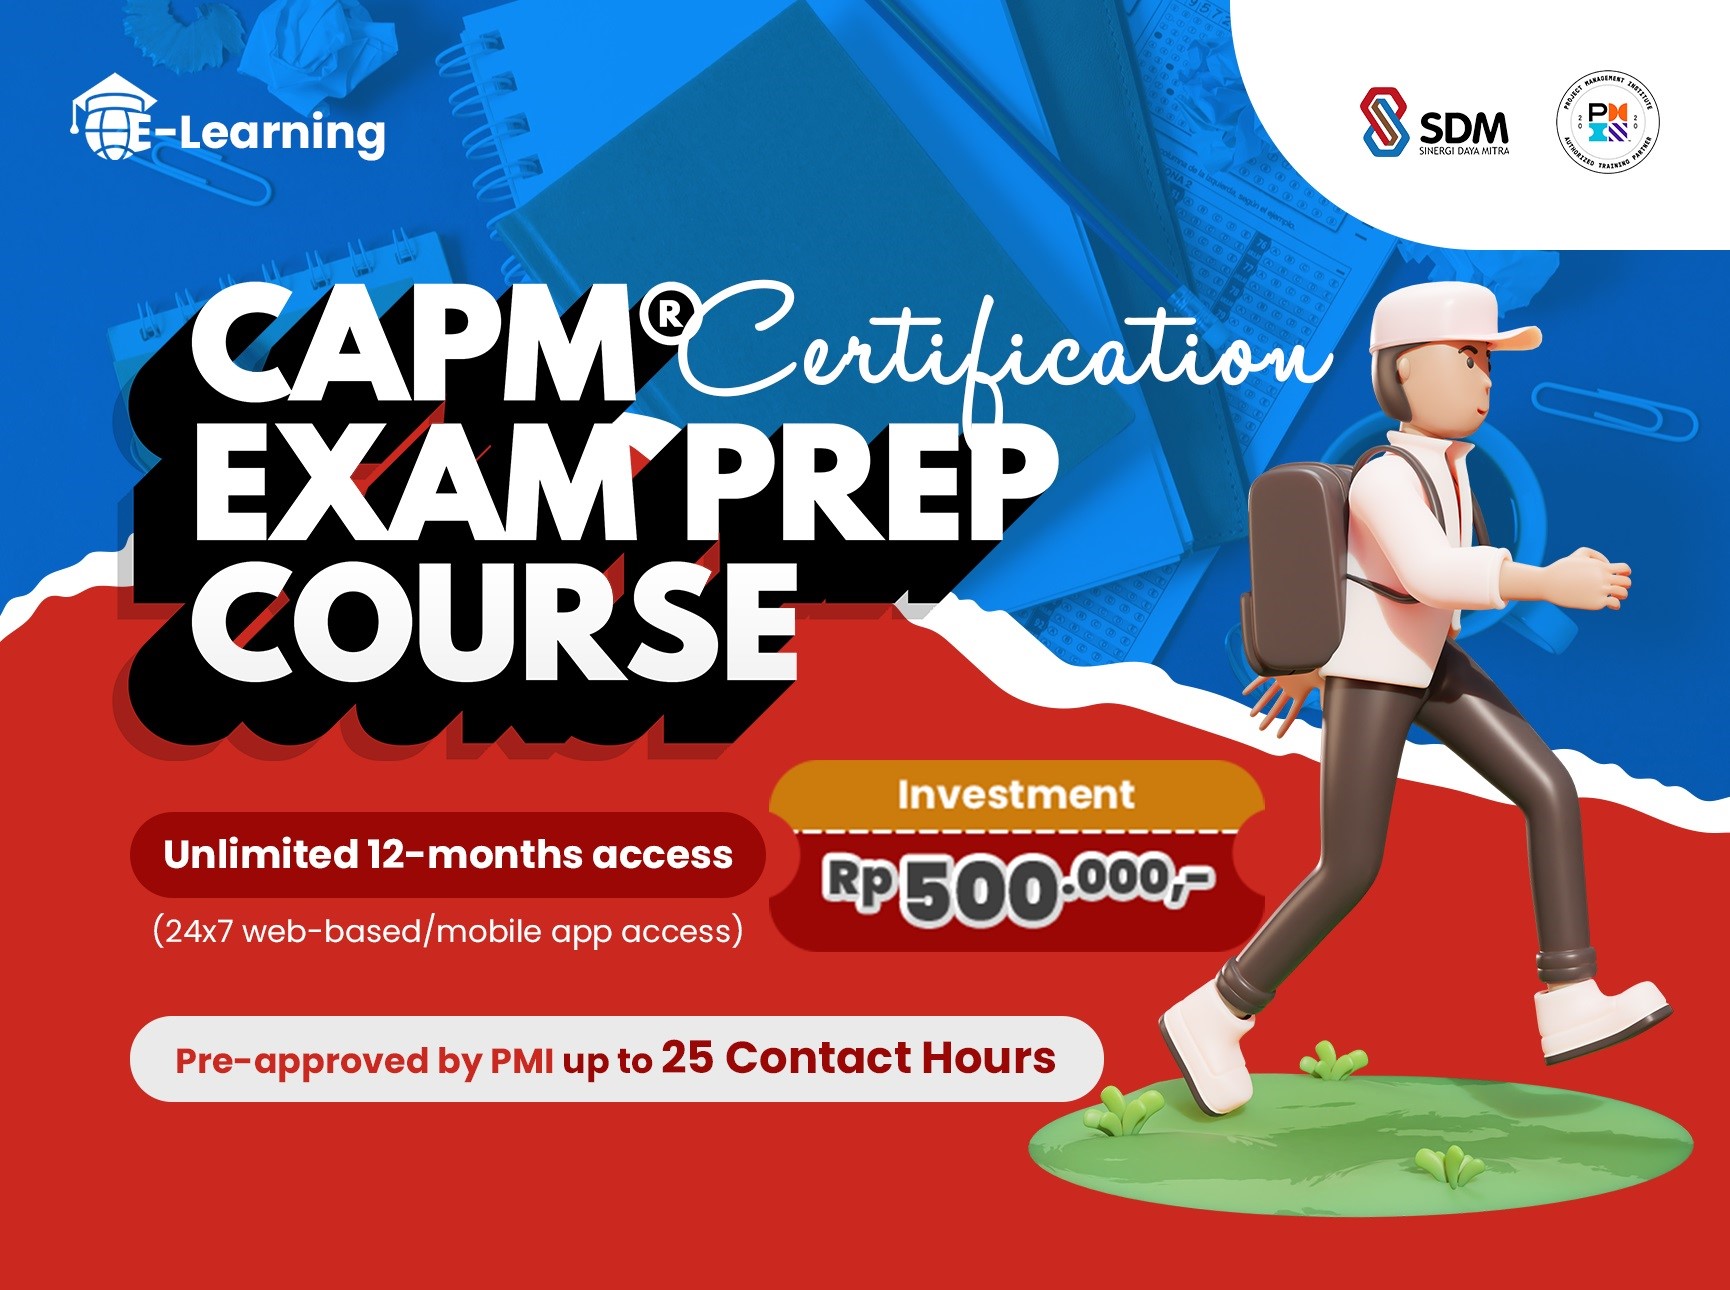 E-Learning CAPM Certification Exam Prep